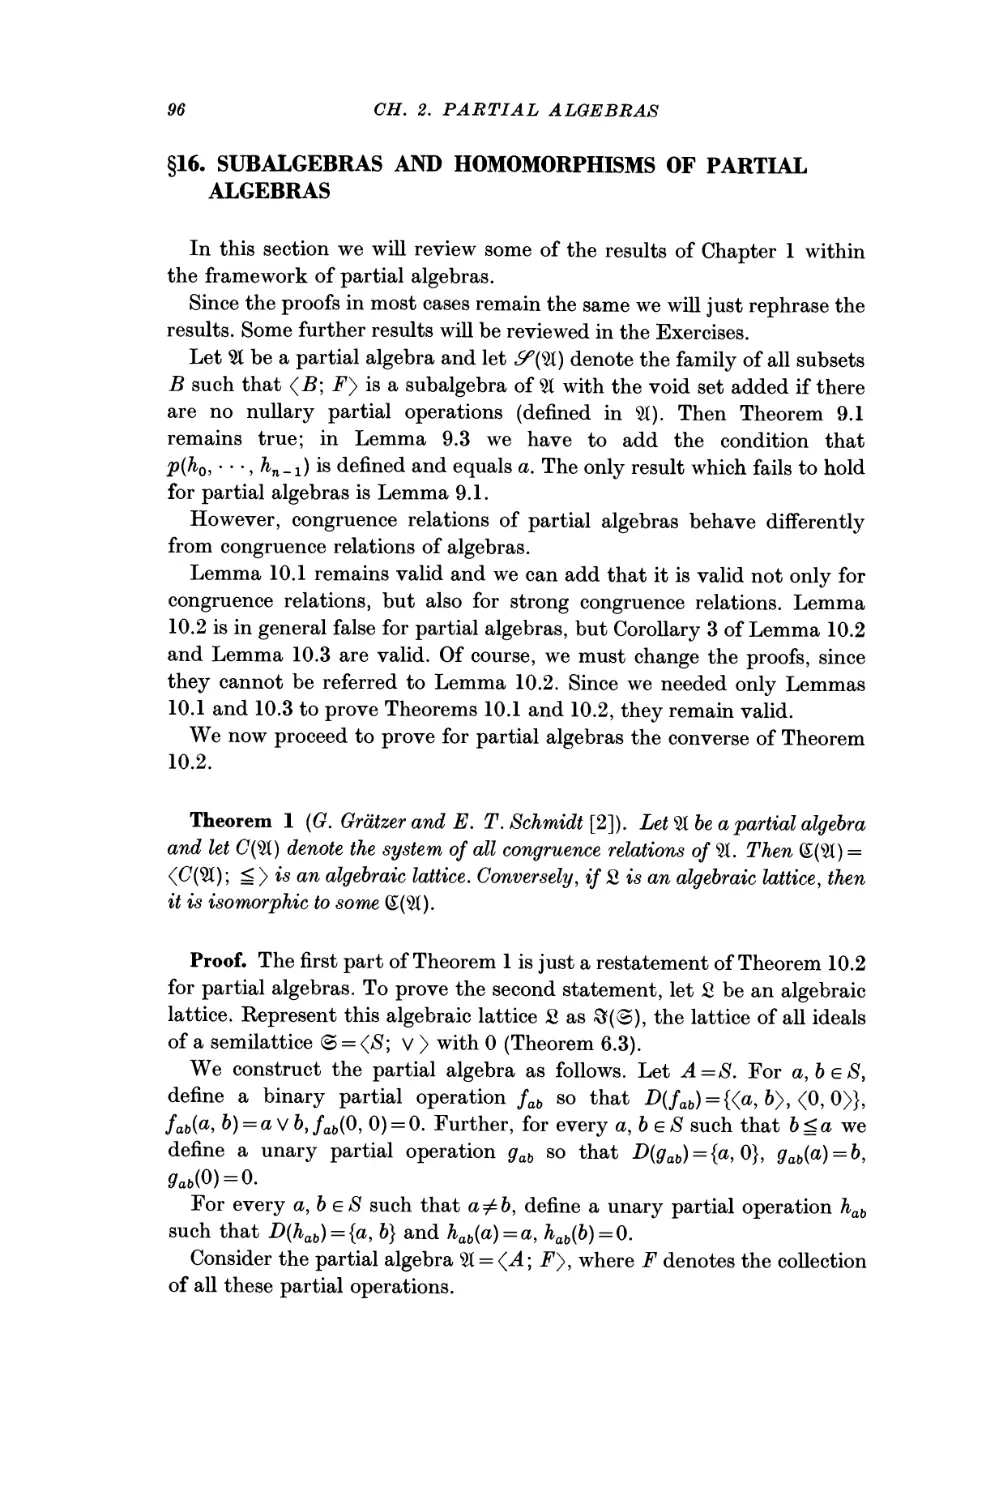 §16. Subalgebras and Homomorphisms of Partial Algebras